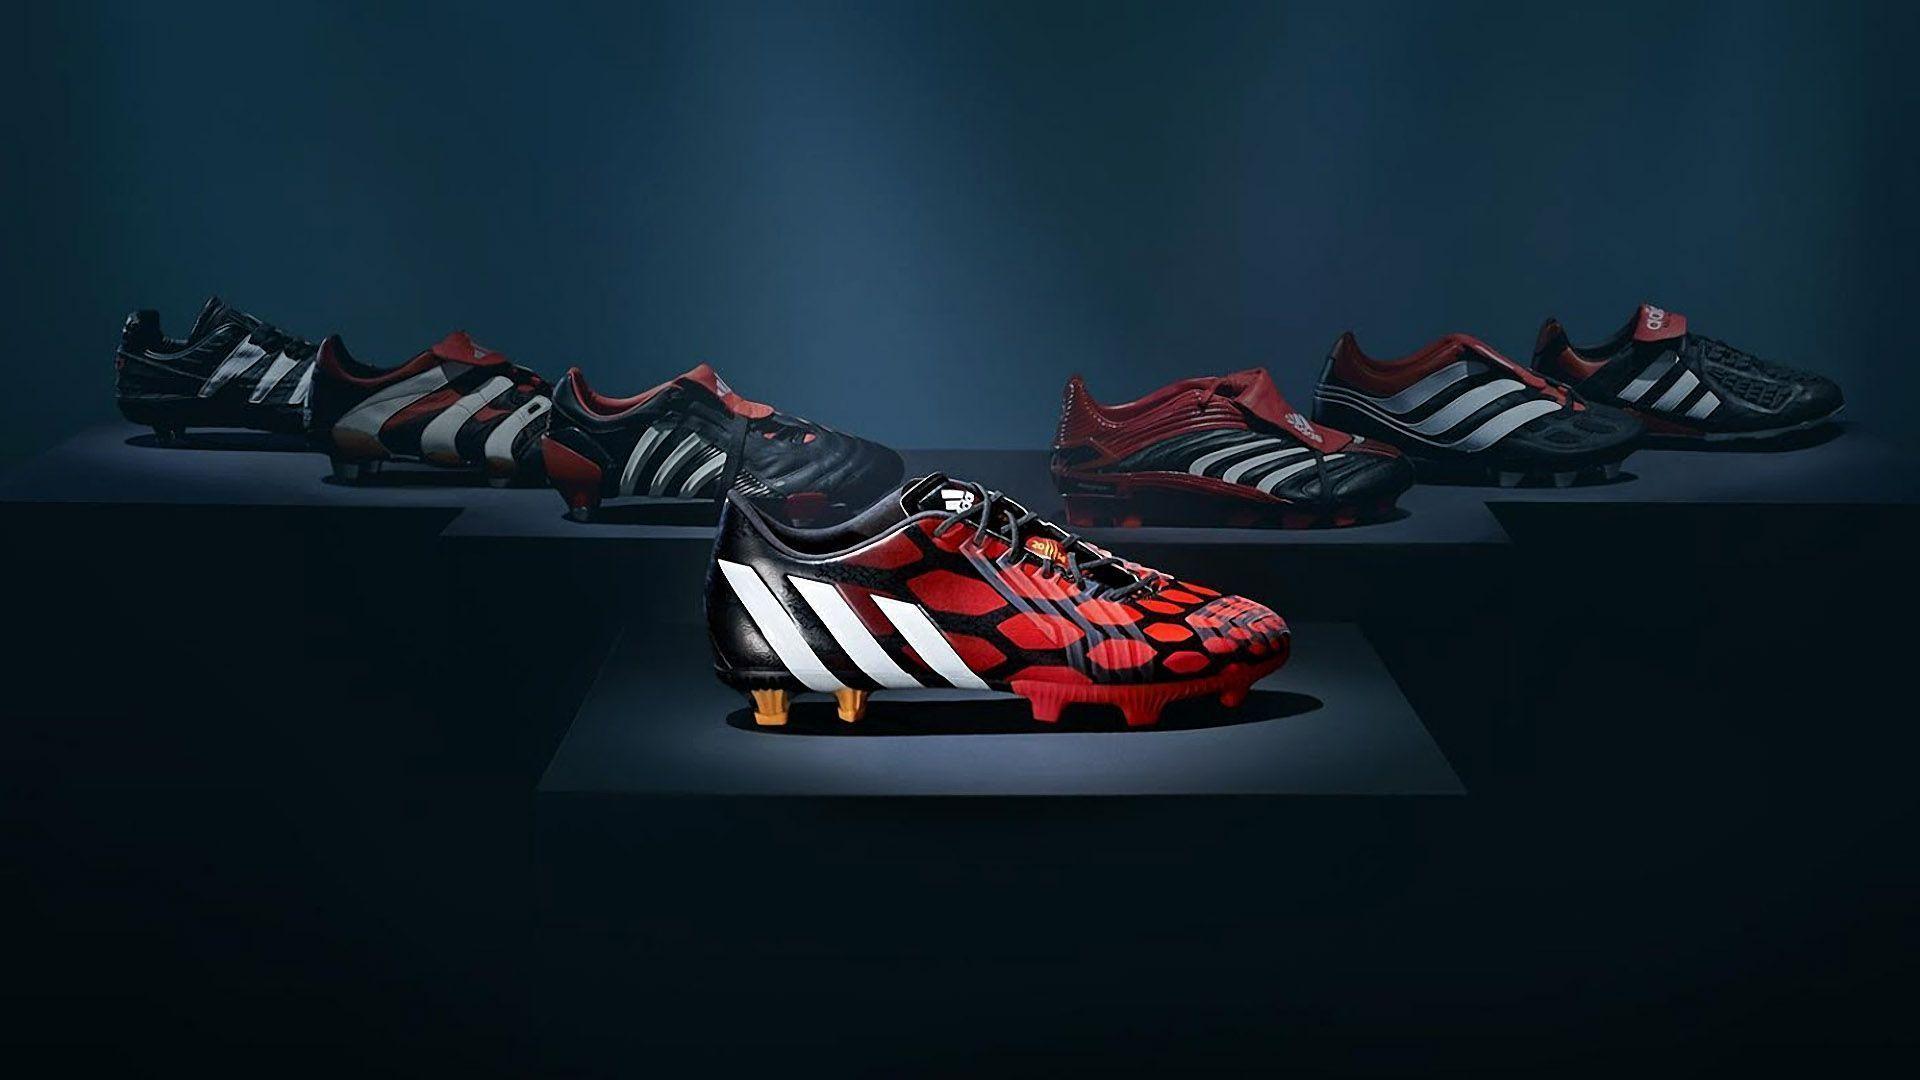 Adidas Predator Instinct Football Boot Models Wallpaper Wide or HD